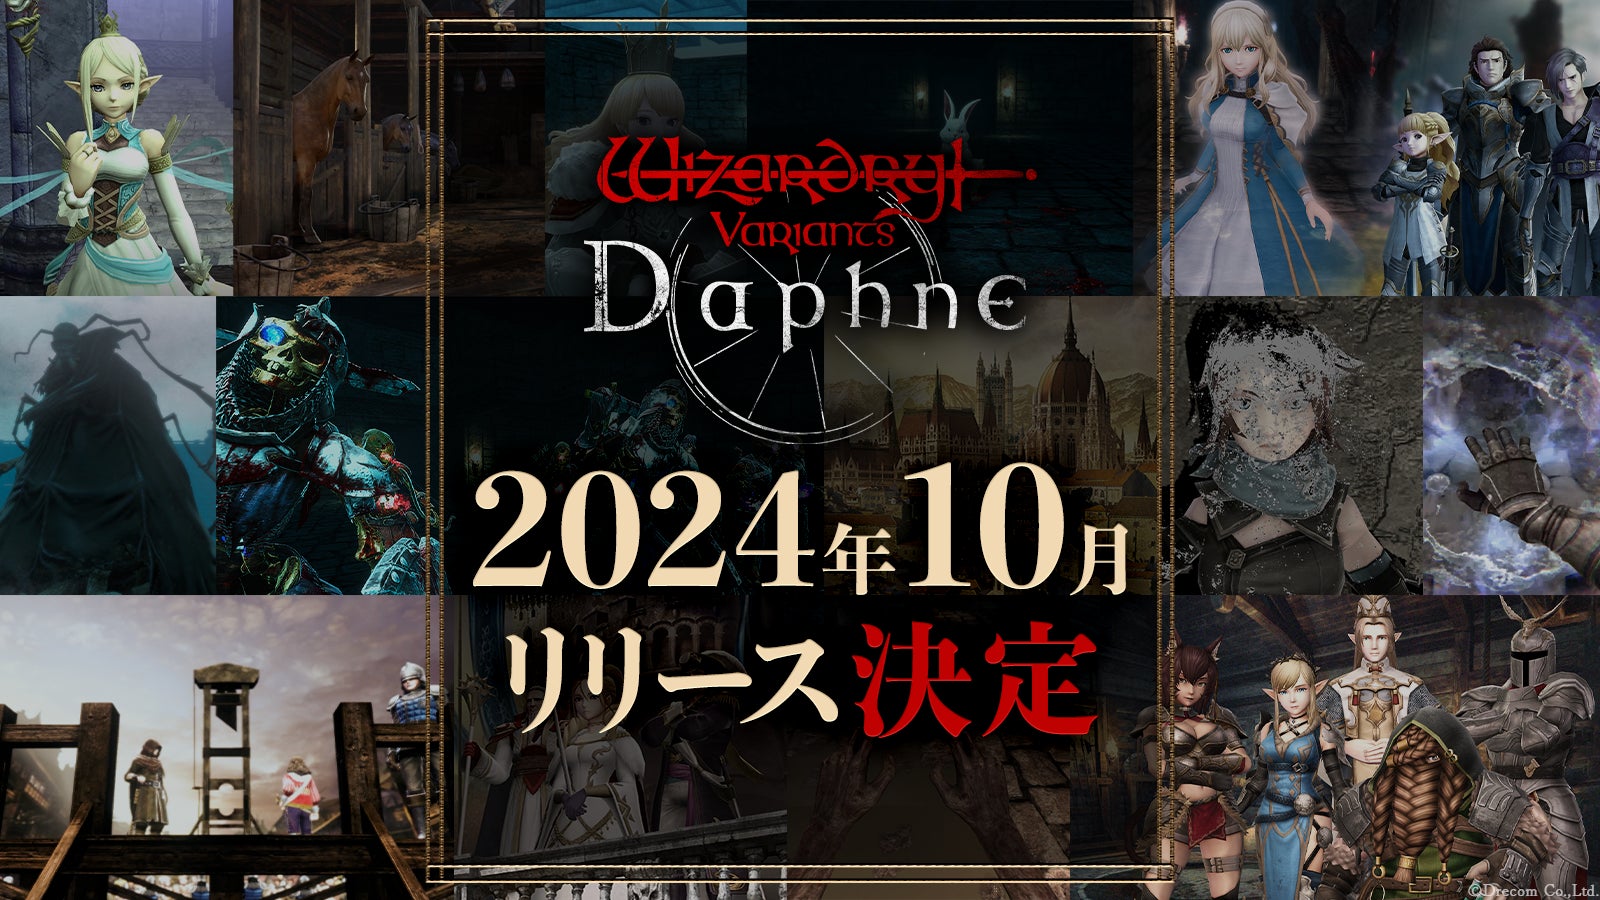 Wizardryシリーズ最新作スマホ向け3DダンジョンRPG『Wizardry Variants Daphne』2024年10月に正式リリース決定！